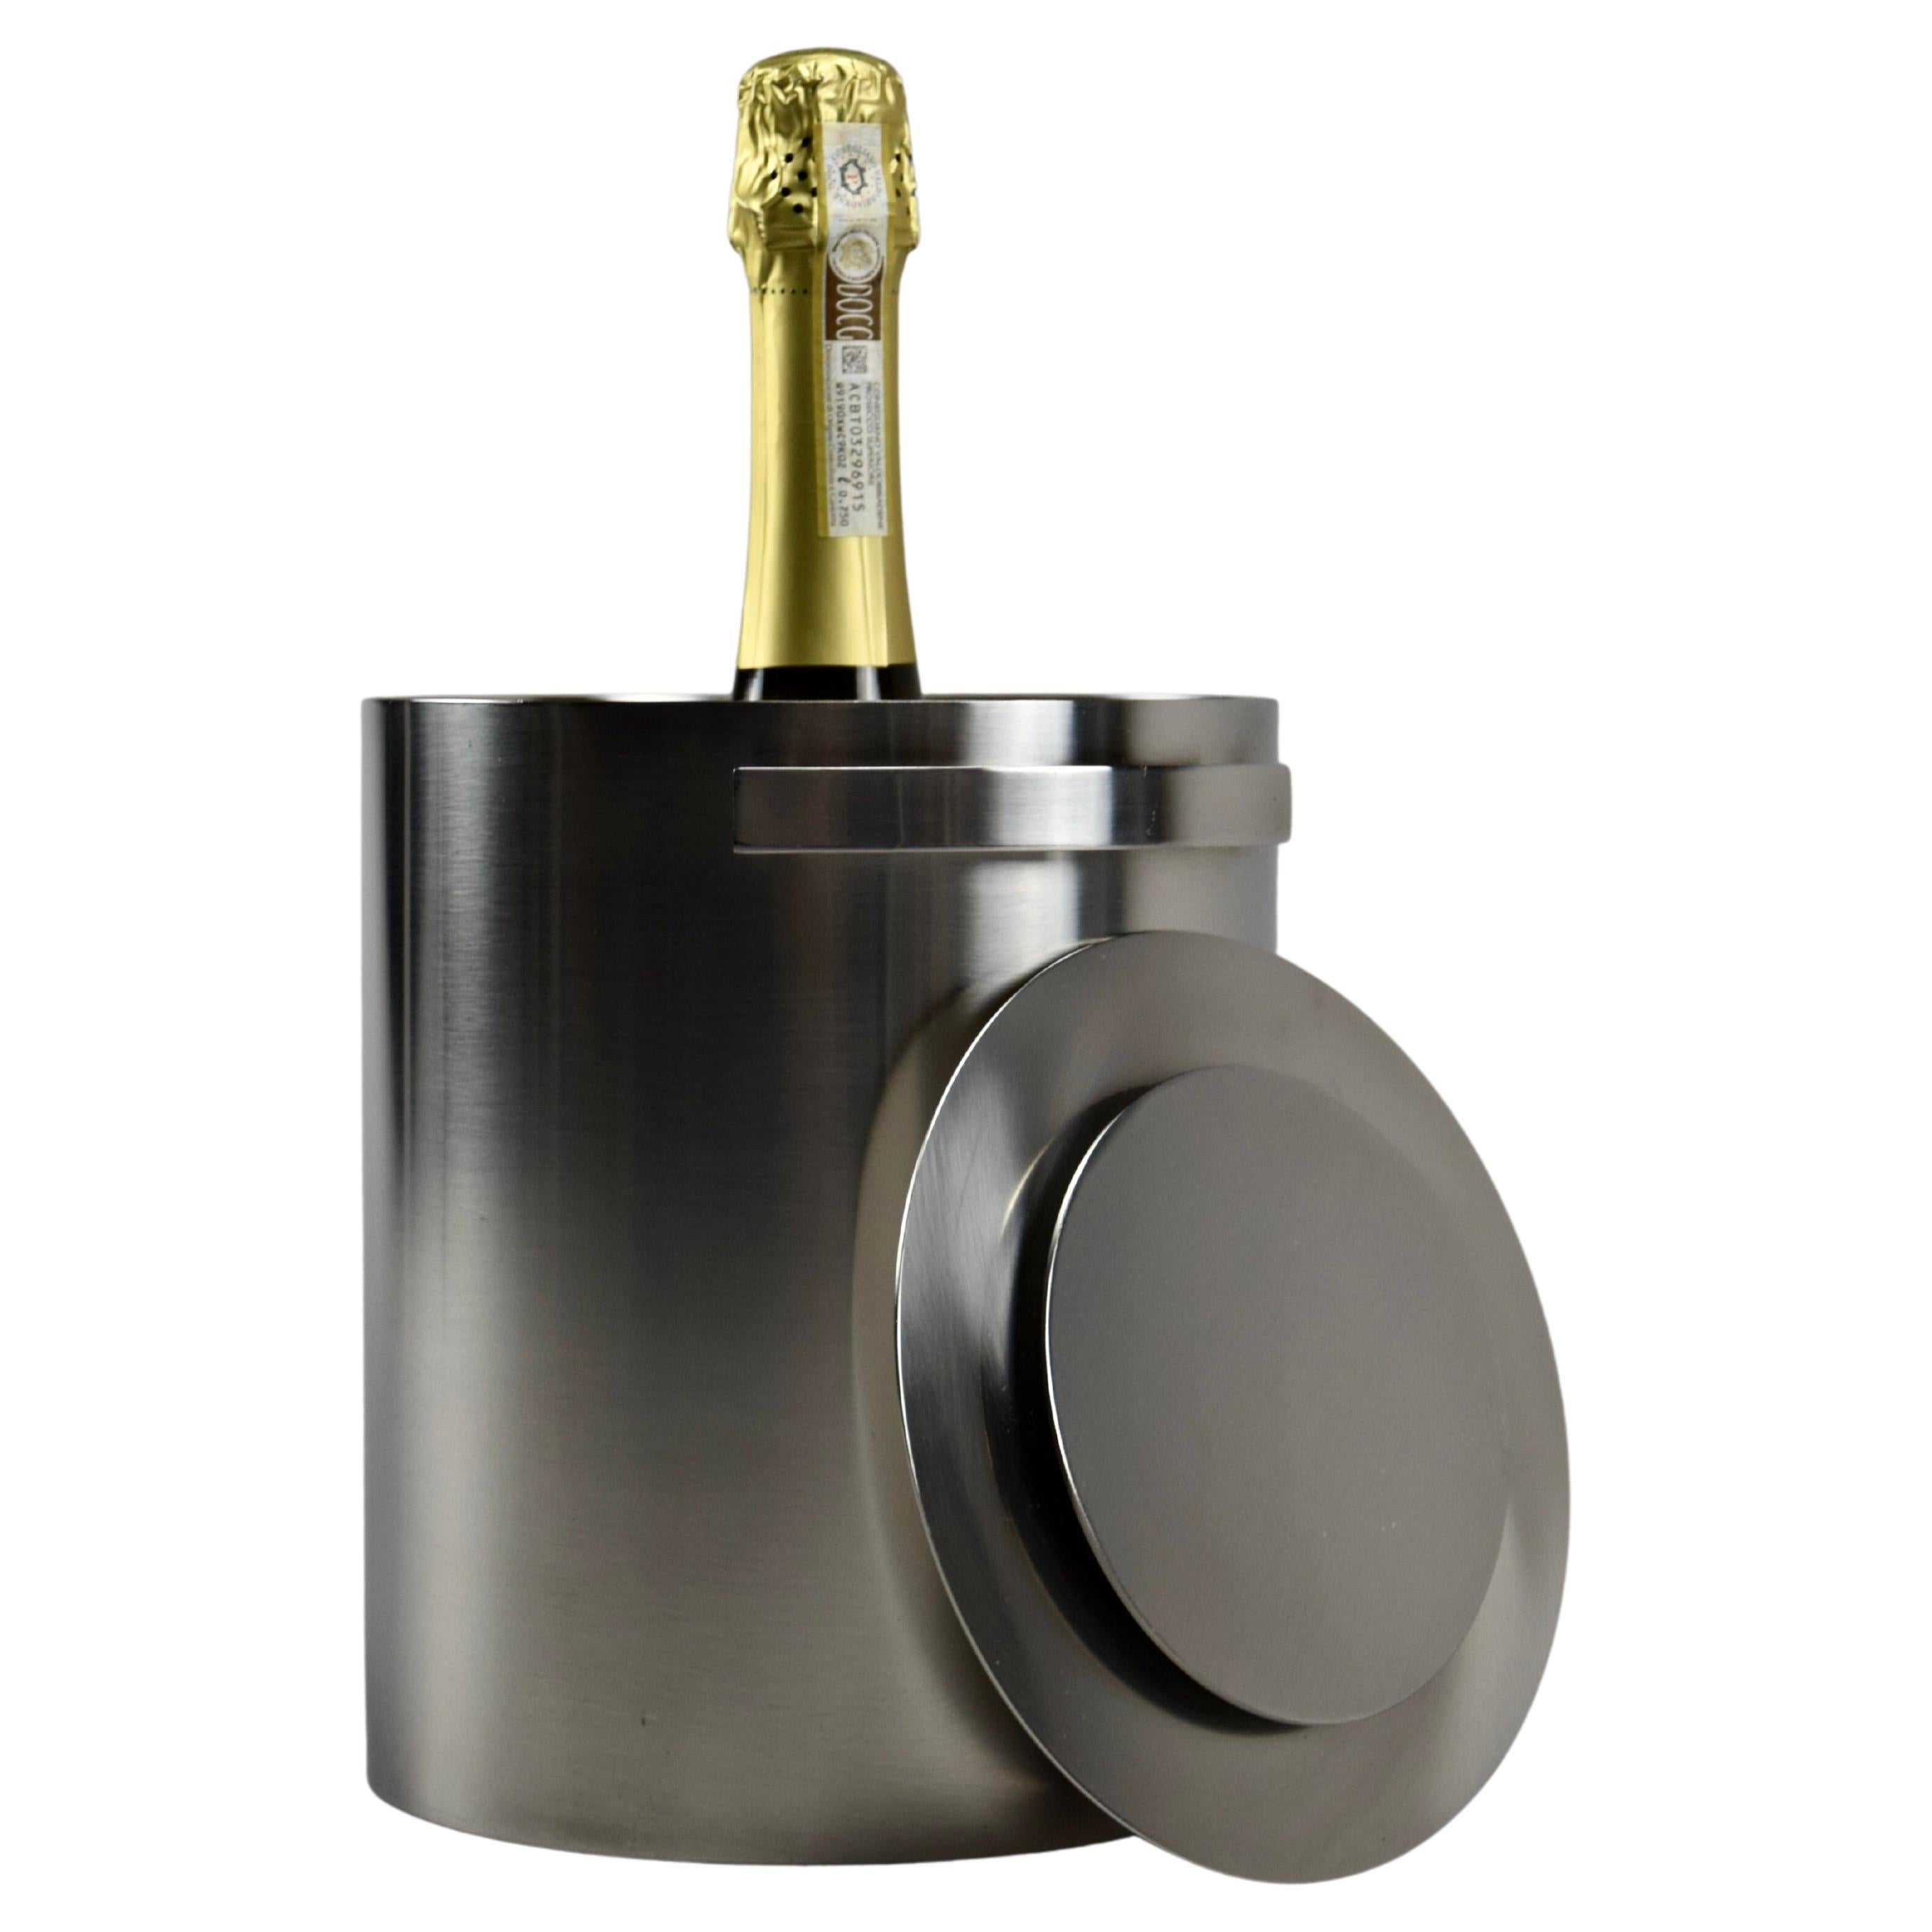 Arne Jacobsen Mid Century Modern Champagne Cooler